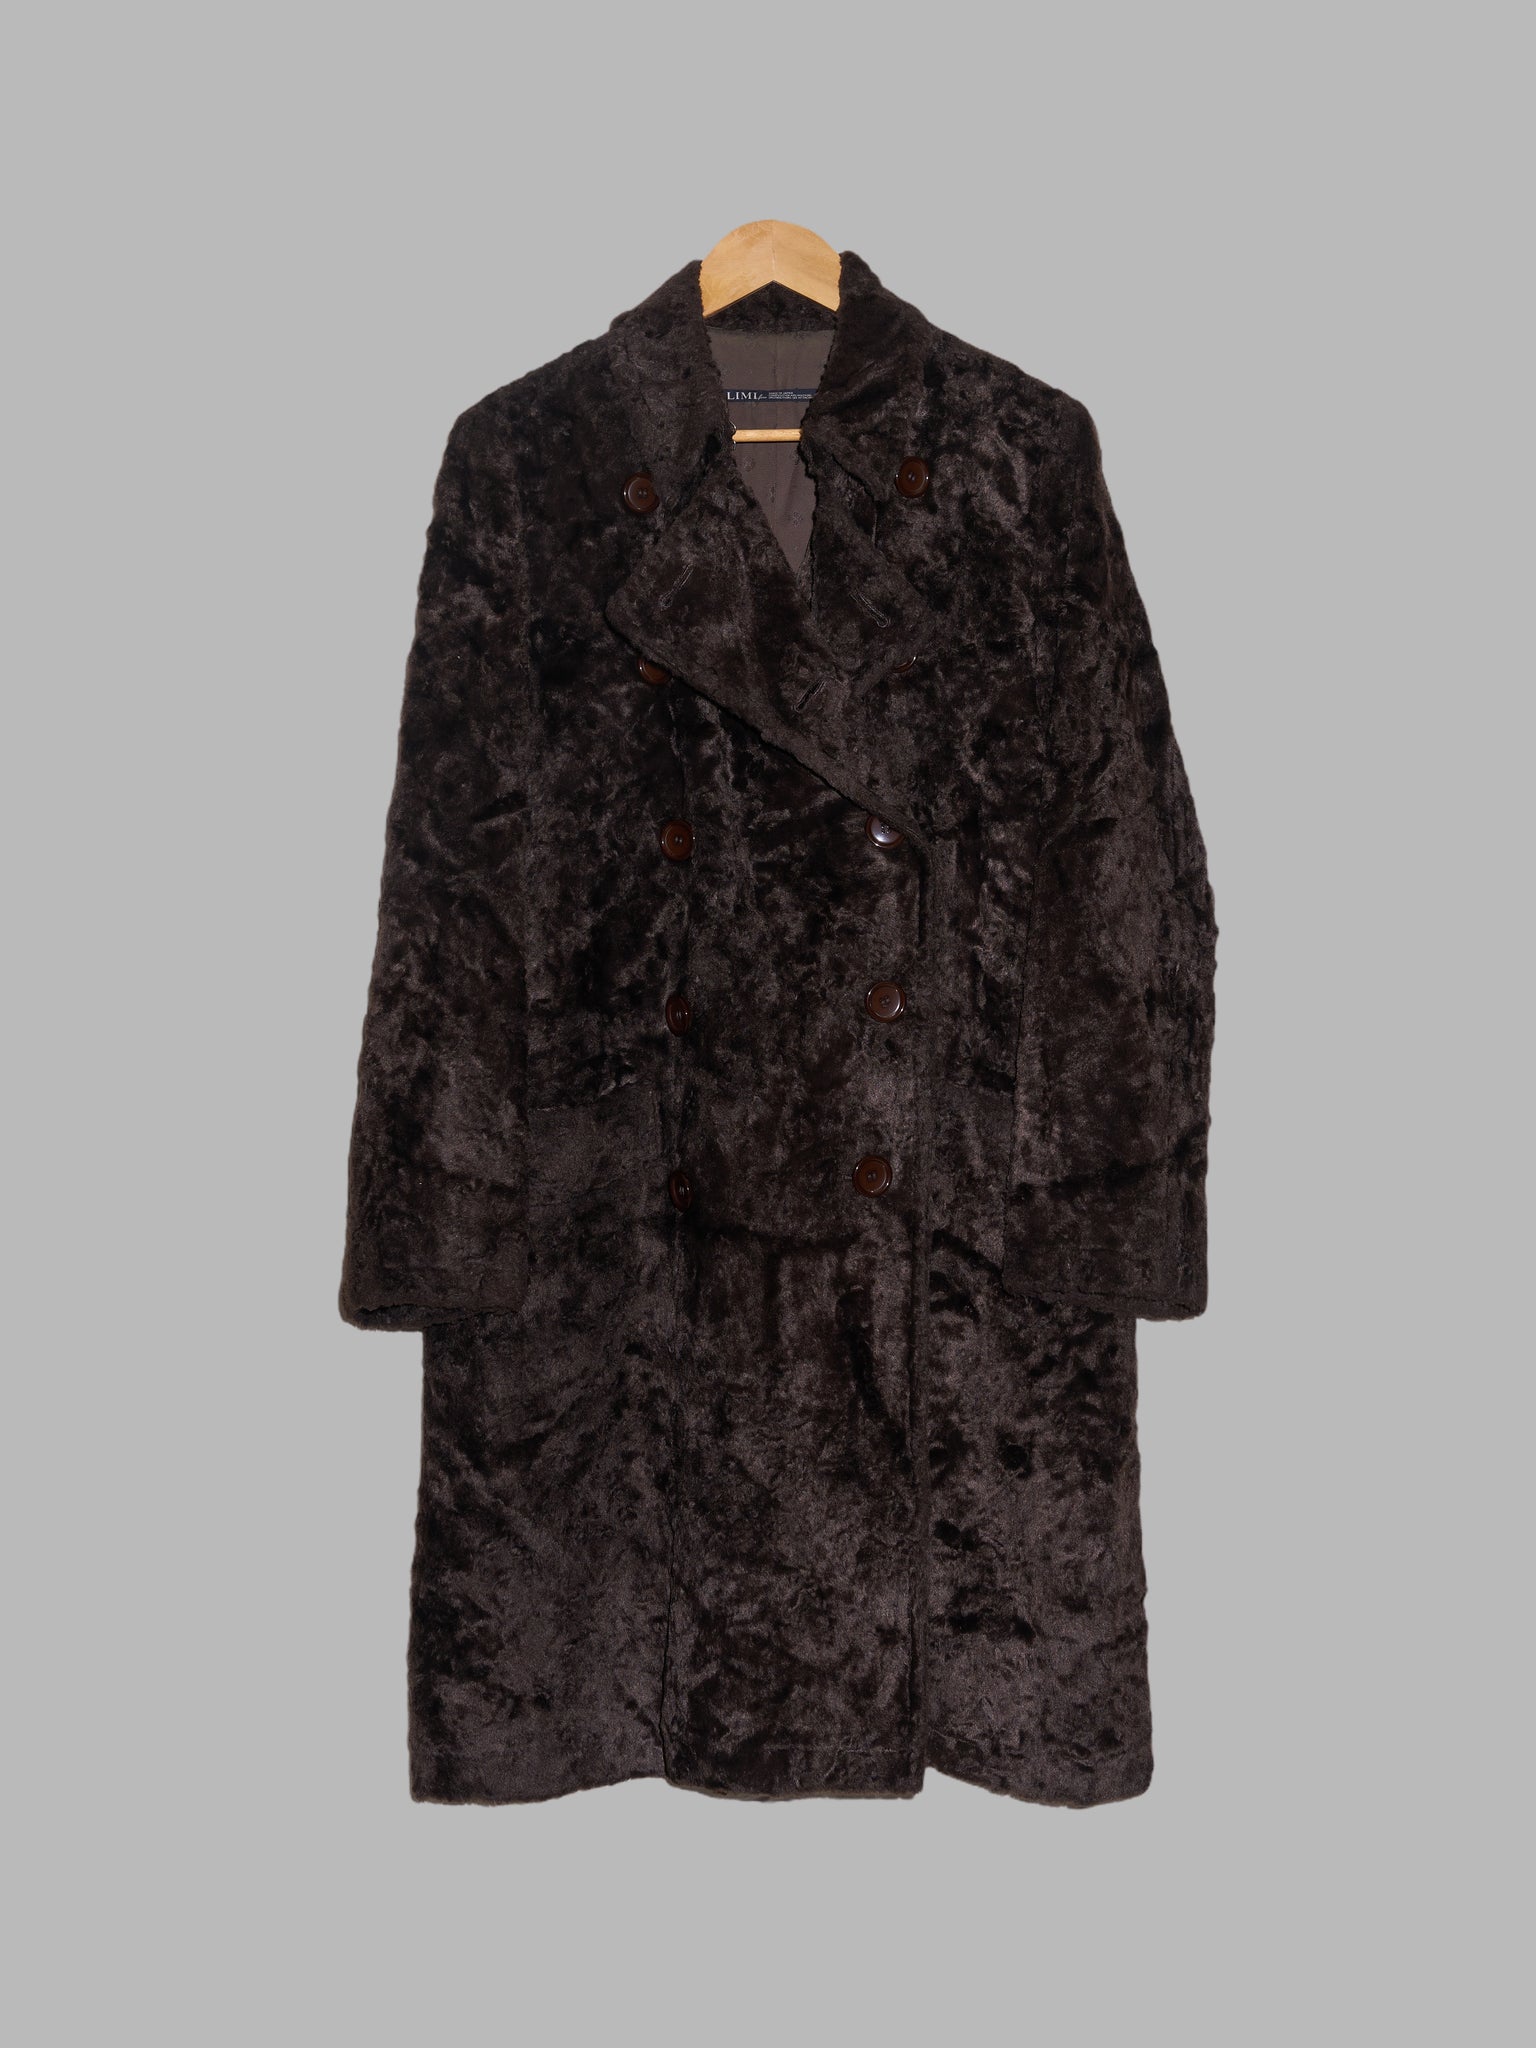 Limi Feu brown rayon faux fur trench coat